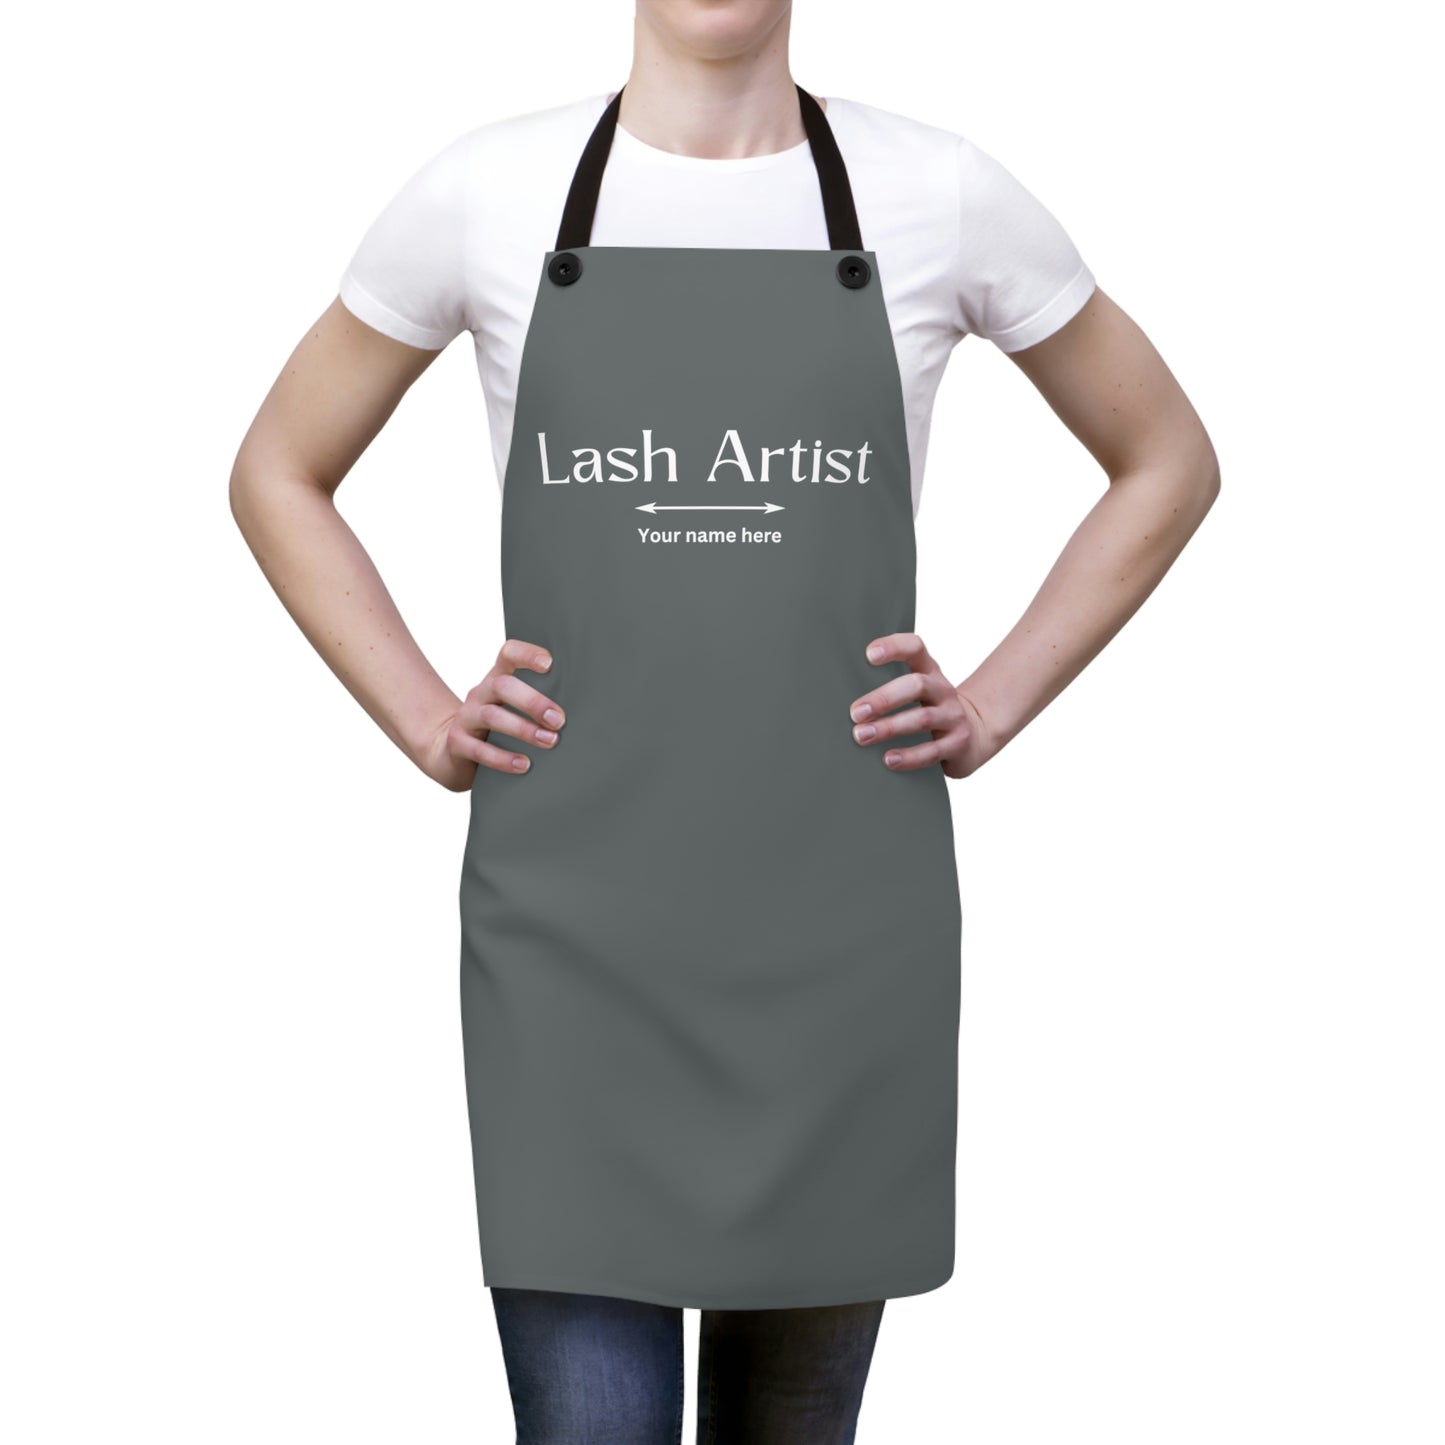 Customized Lash Extension Apron, Lash Artist Apron, Personalized Lash Extension Apron